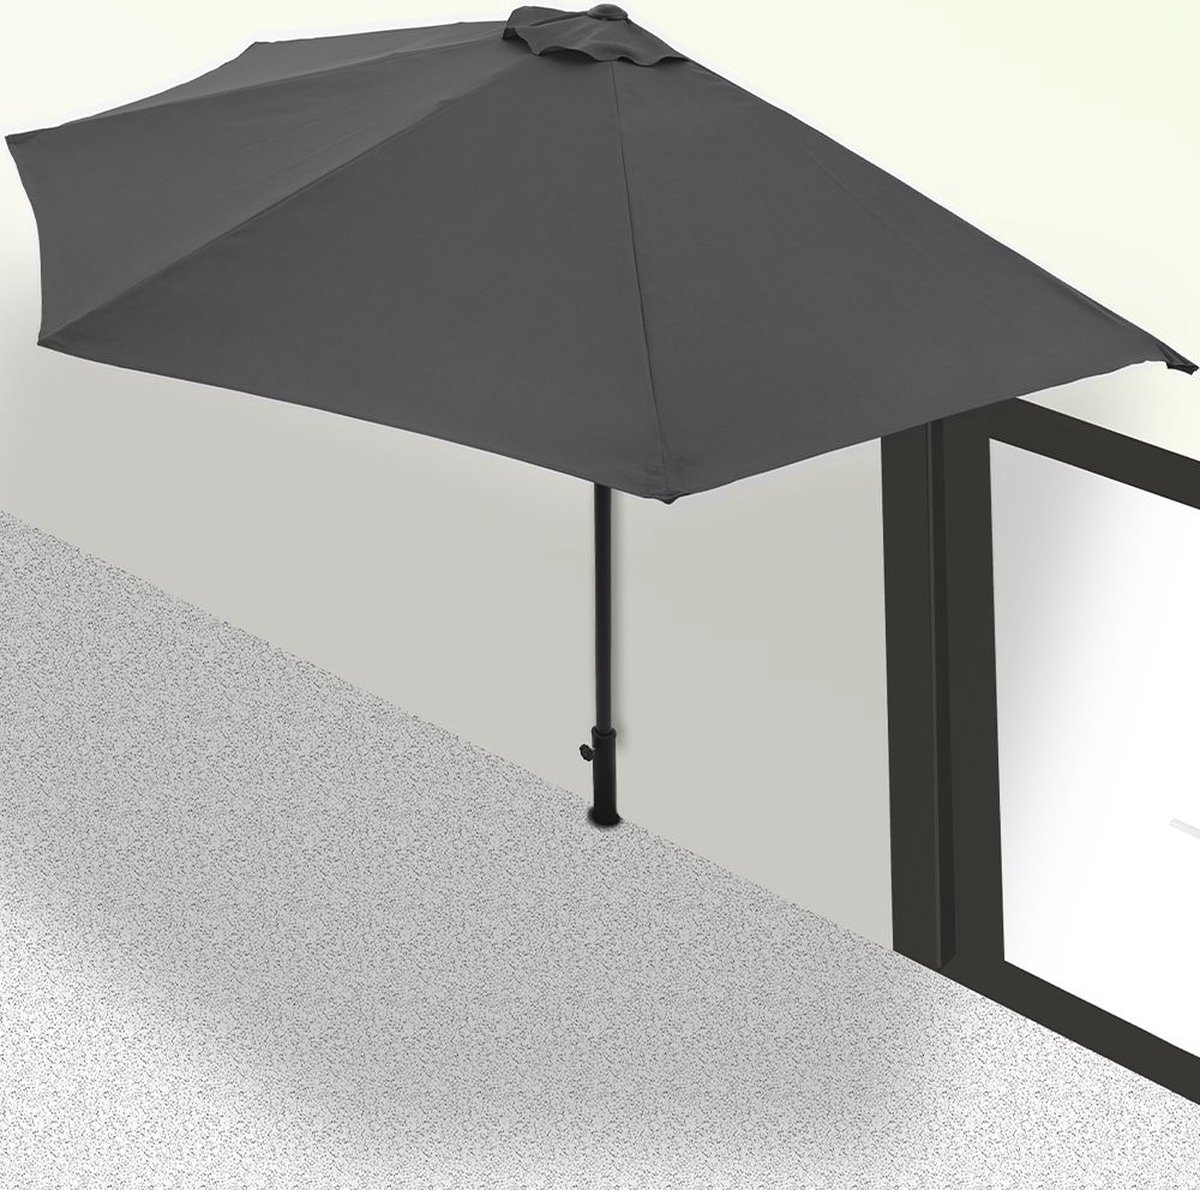 Teken een foto lip Sport Balkon parasol - Half rond model - Antraciet | bol.com